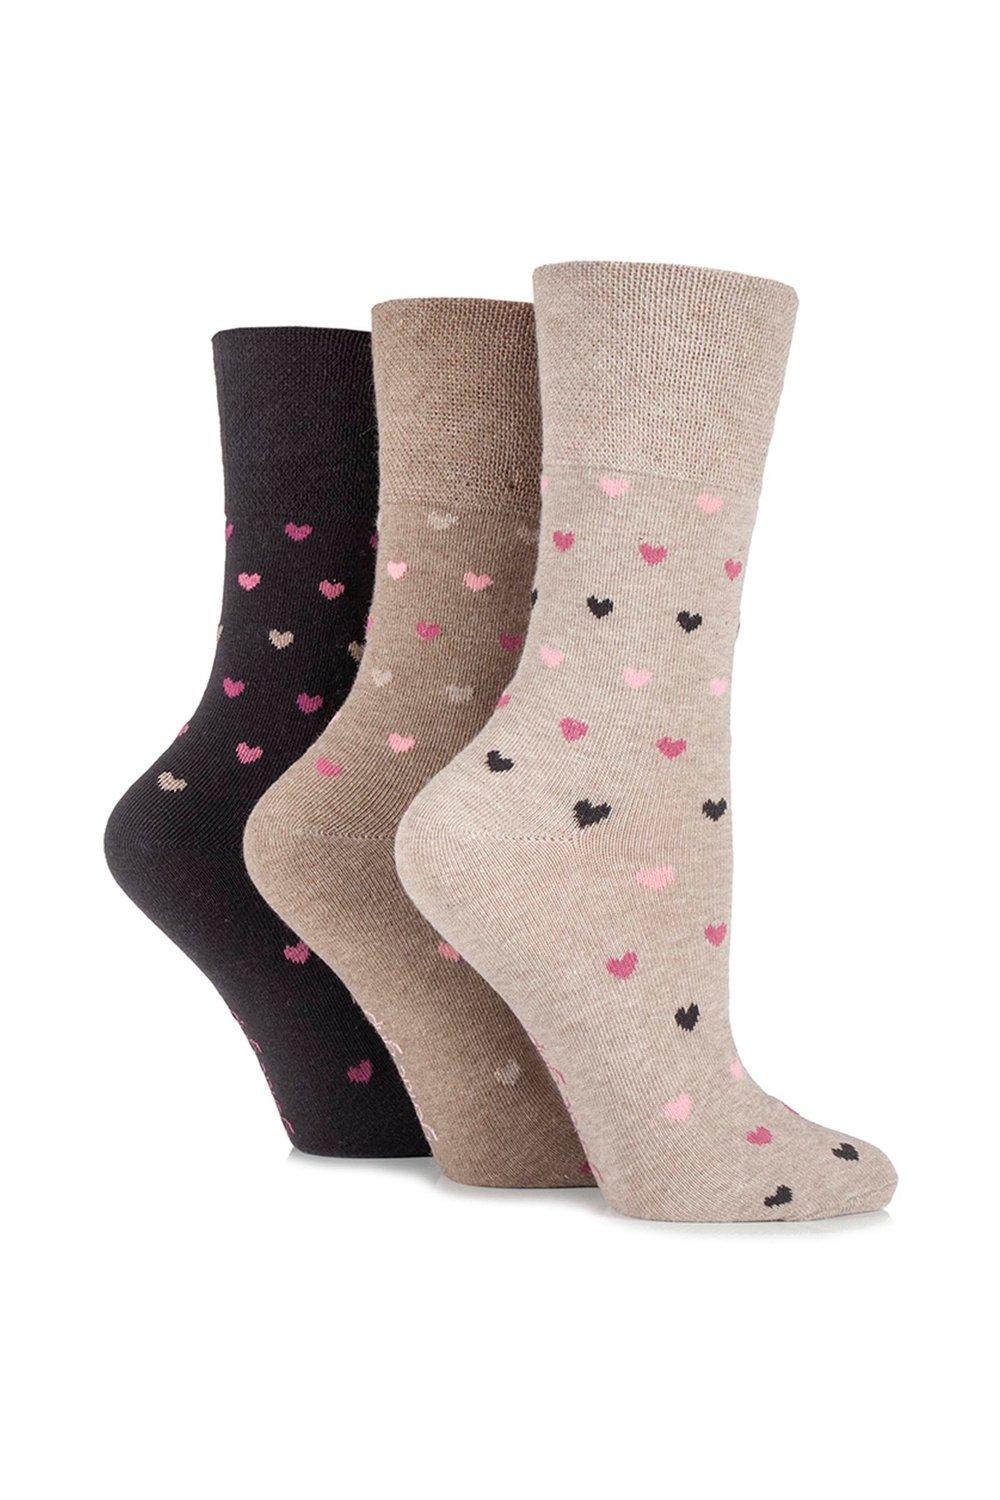 3 Pair Heart Patterned Cotton Socks